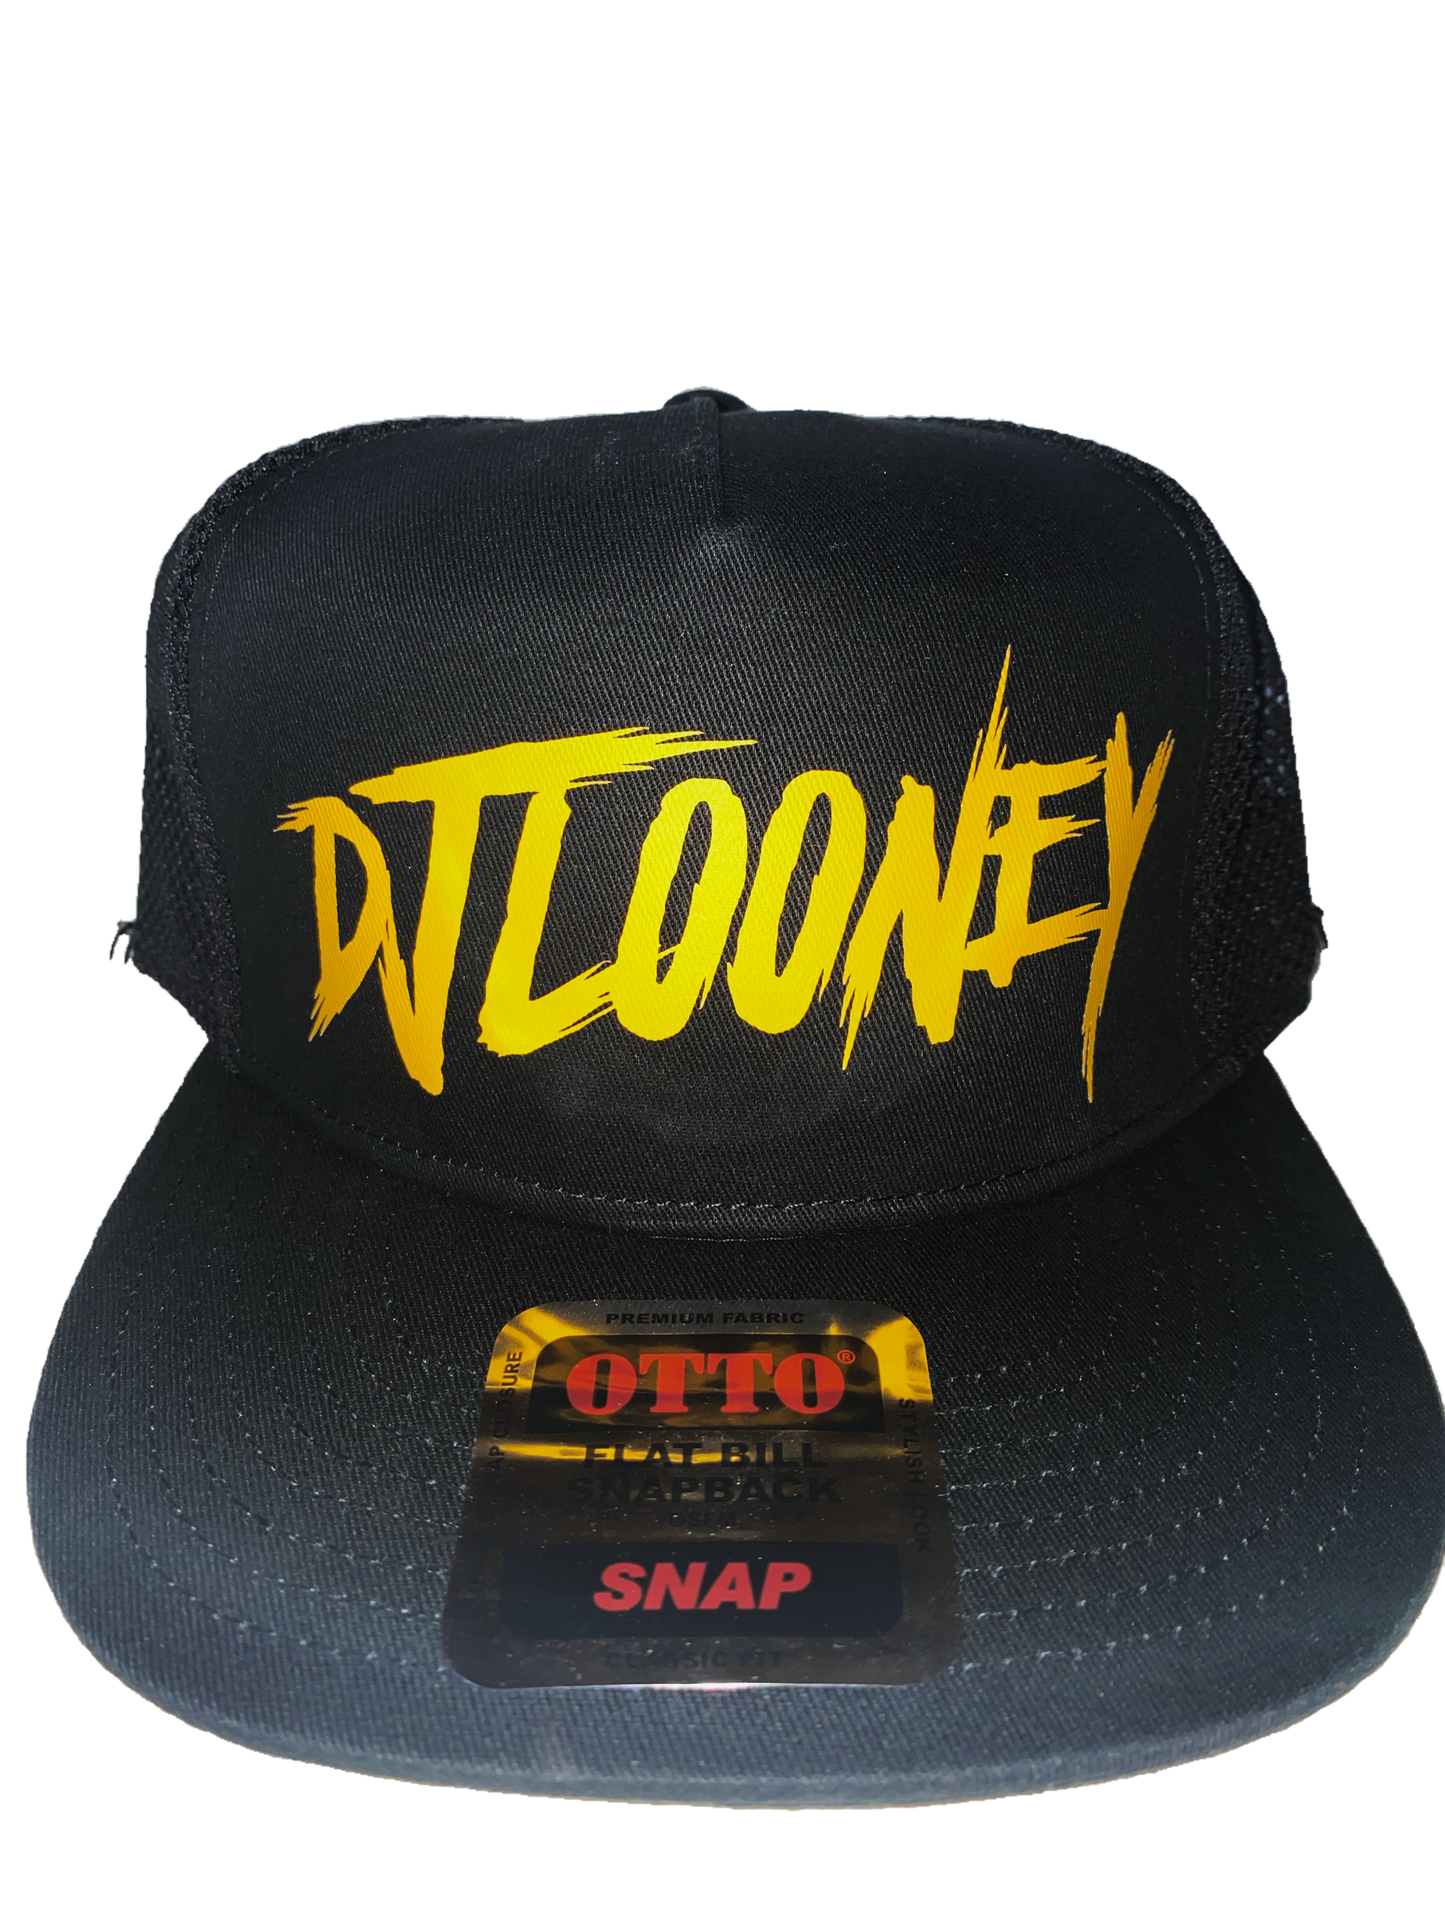 DJ Looney Black & Yellow Trucker Hat.